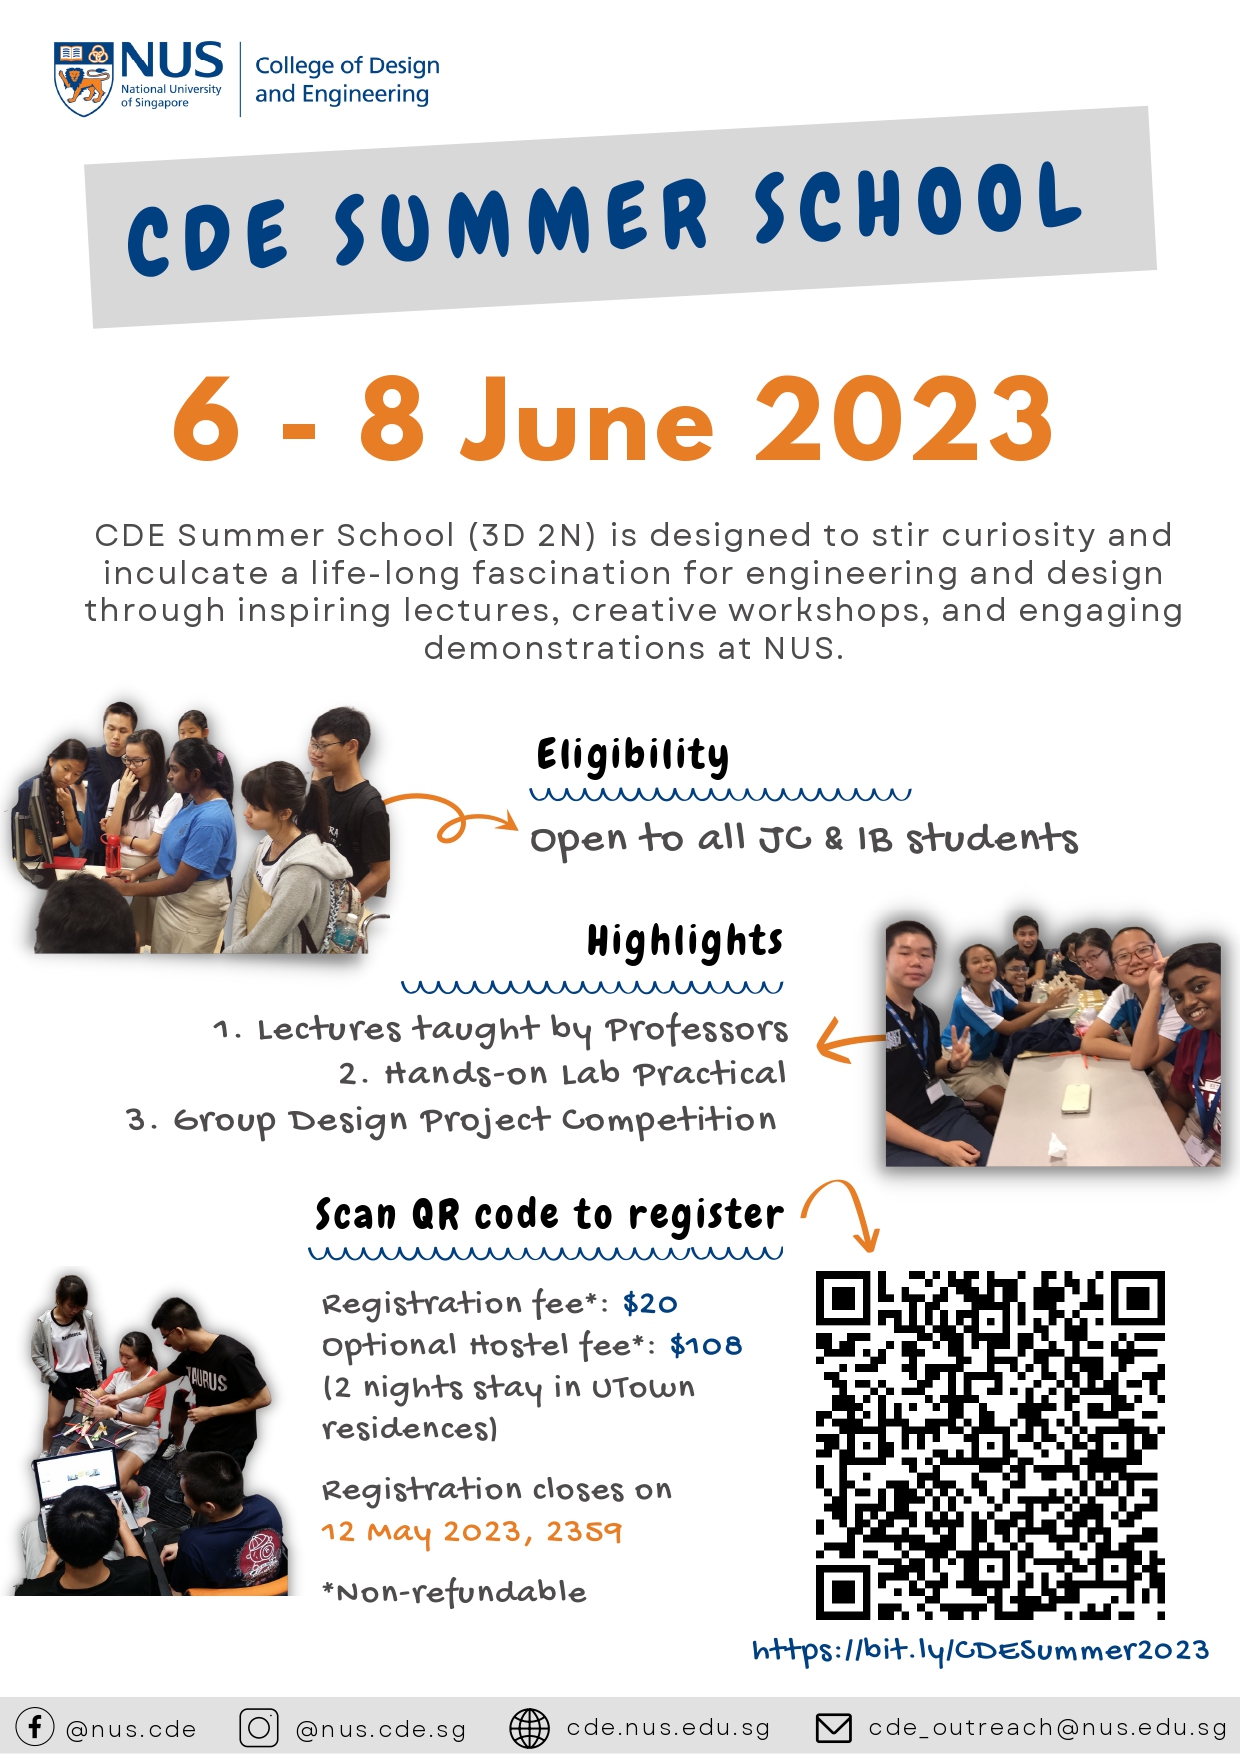 230426_CDE Summer School 2023 Flyer (1)_page-0001